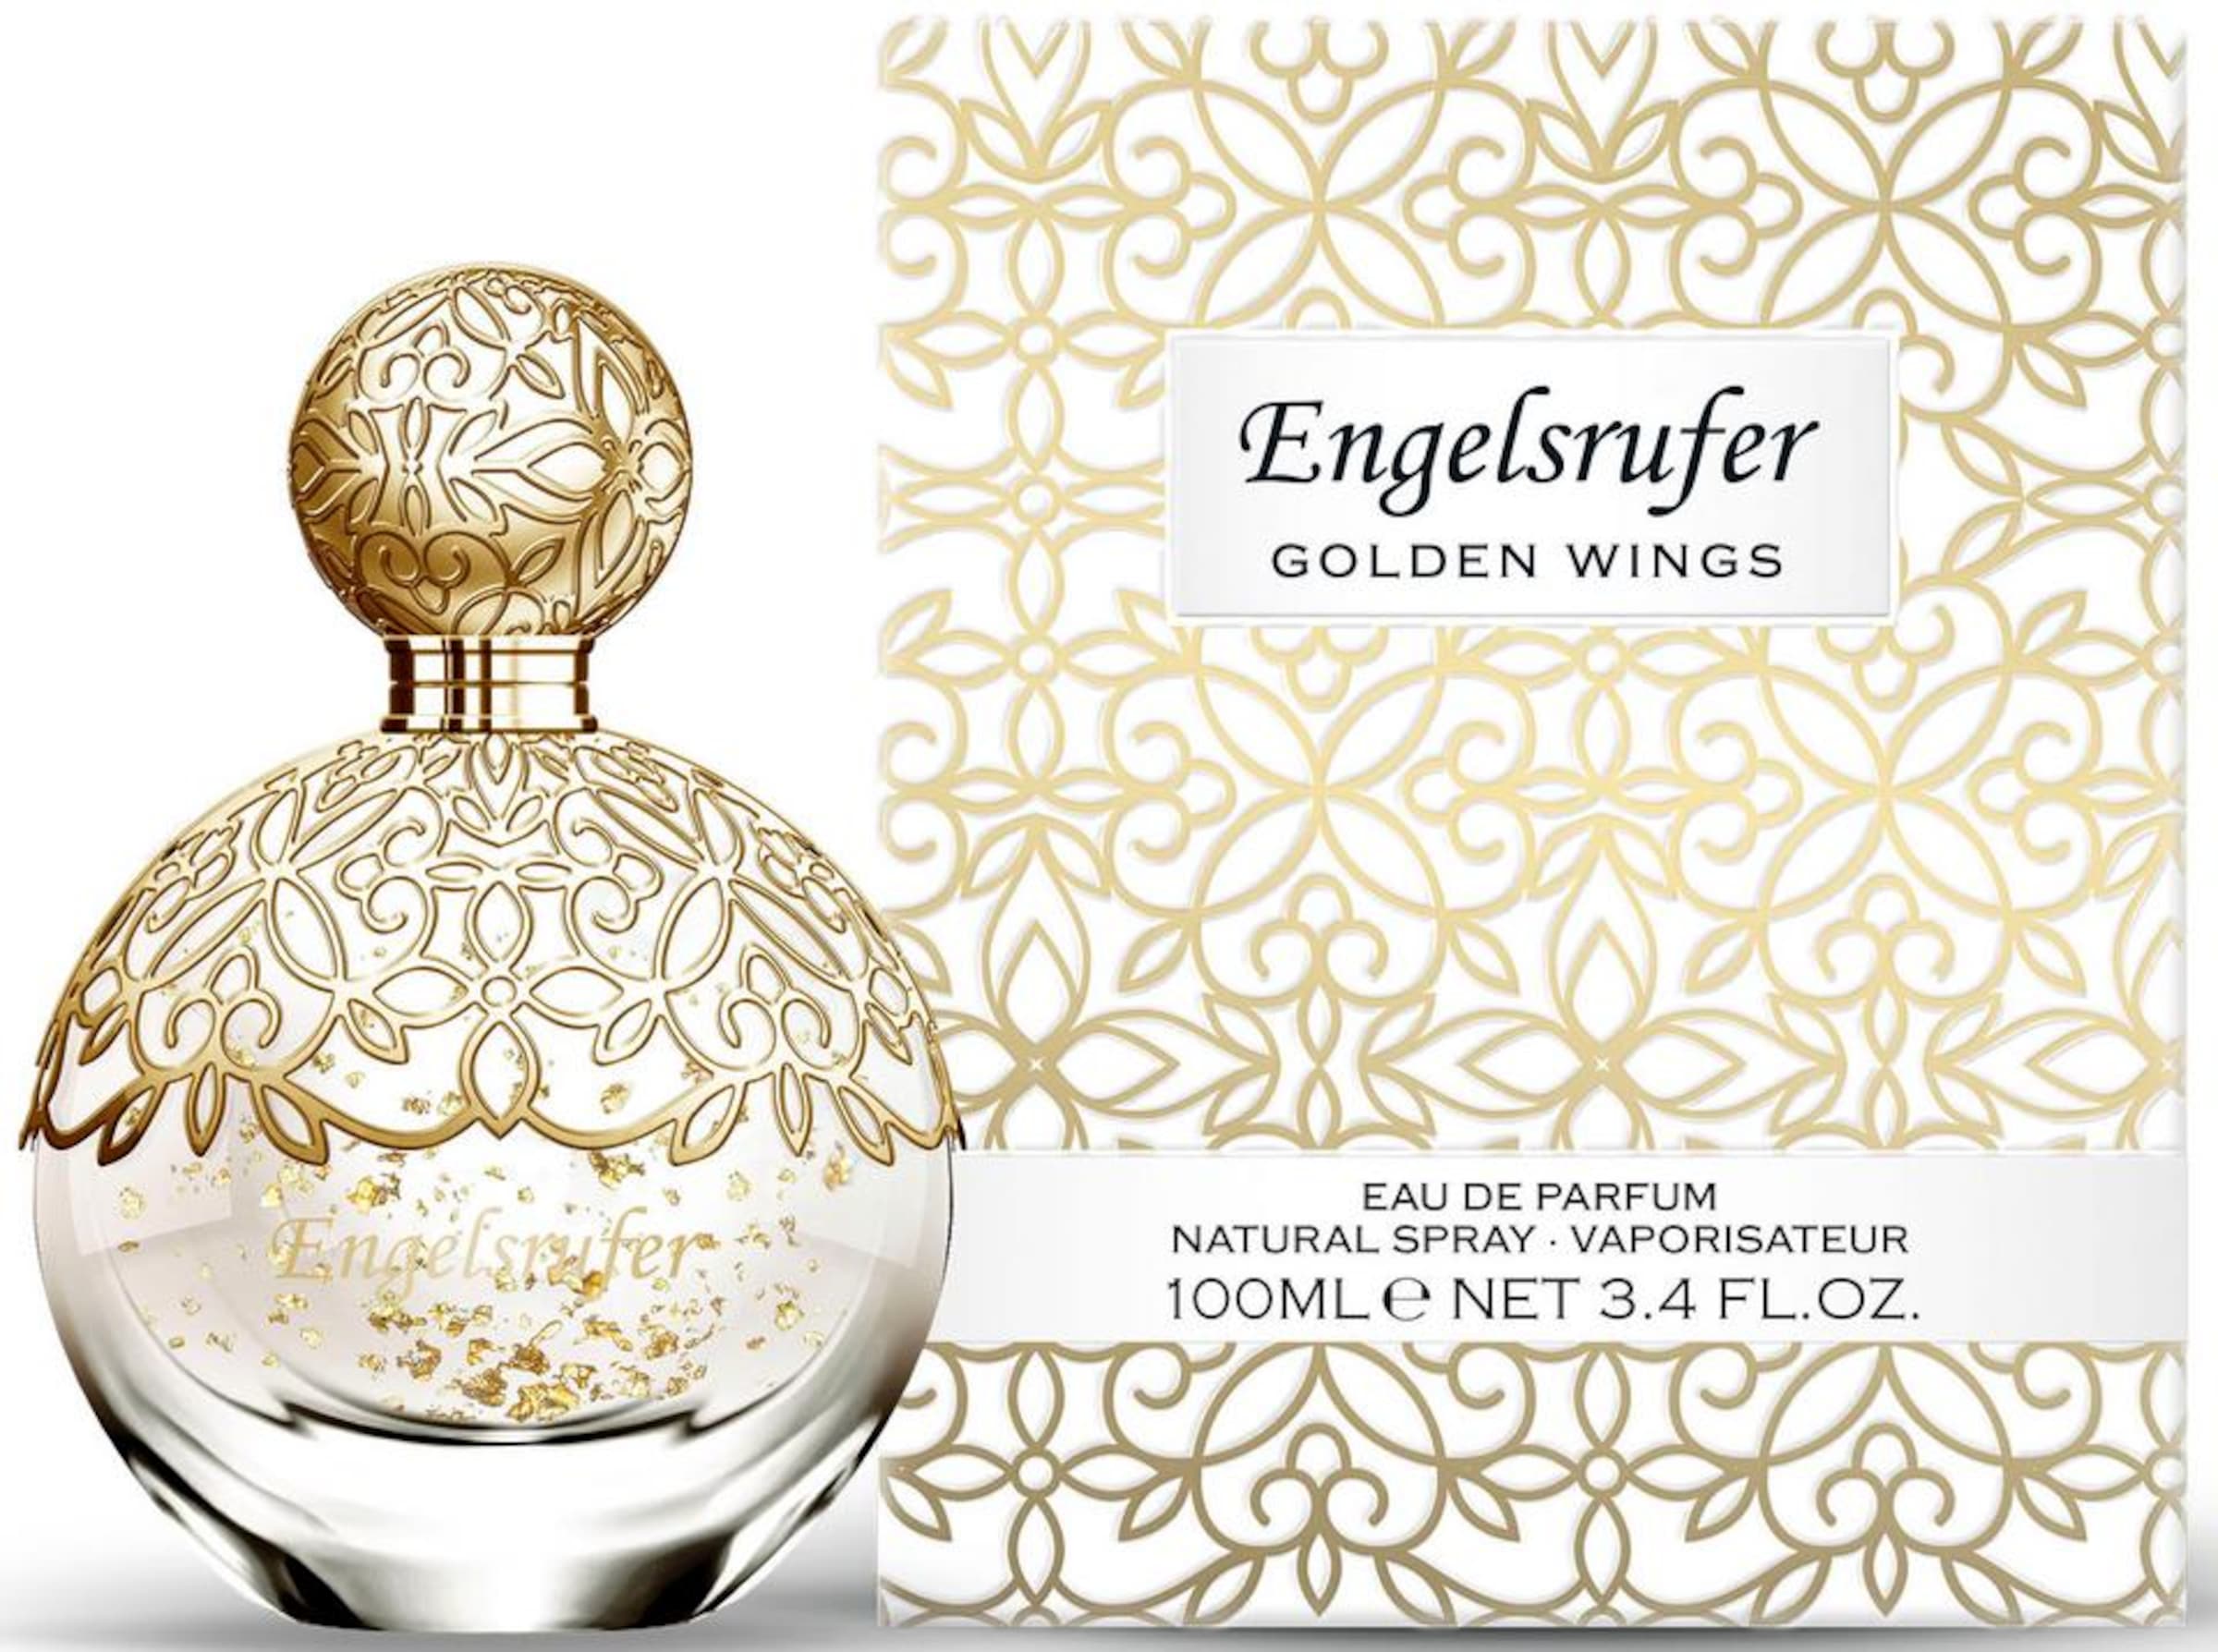 Engelsrufer Parfum Golden Wings in 